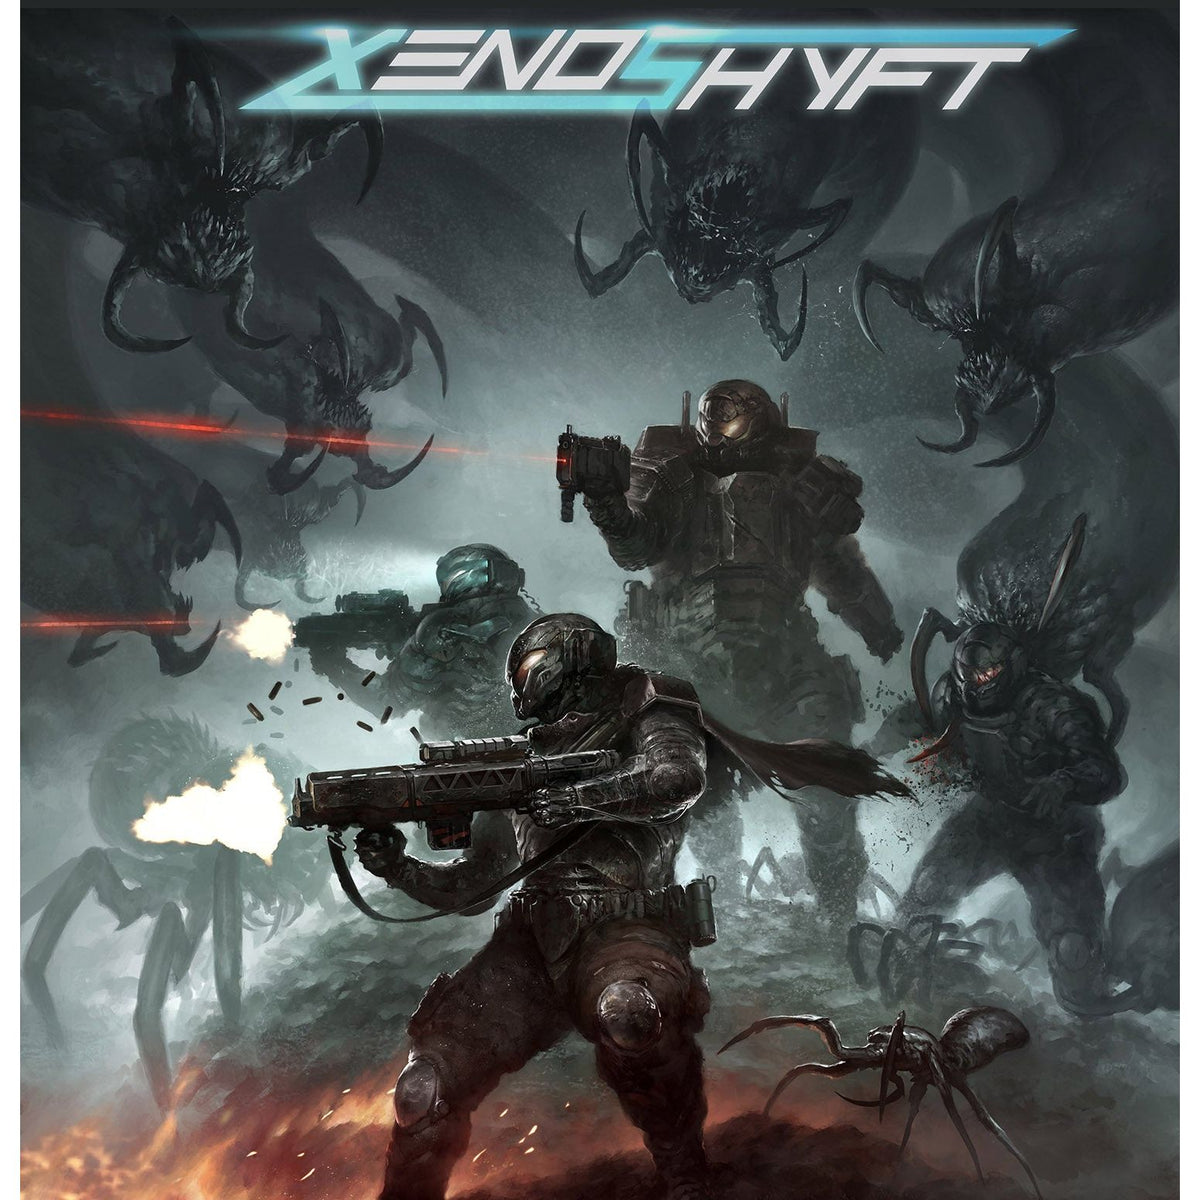 Xenoshyft Onslaught Core Game